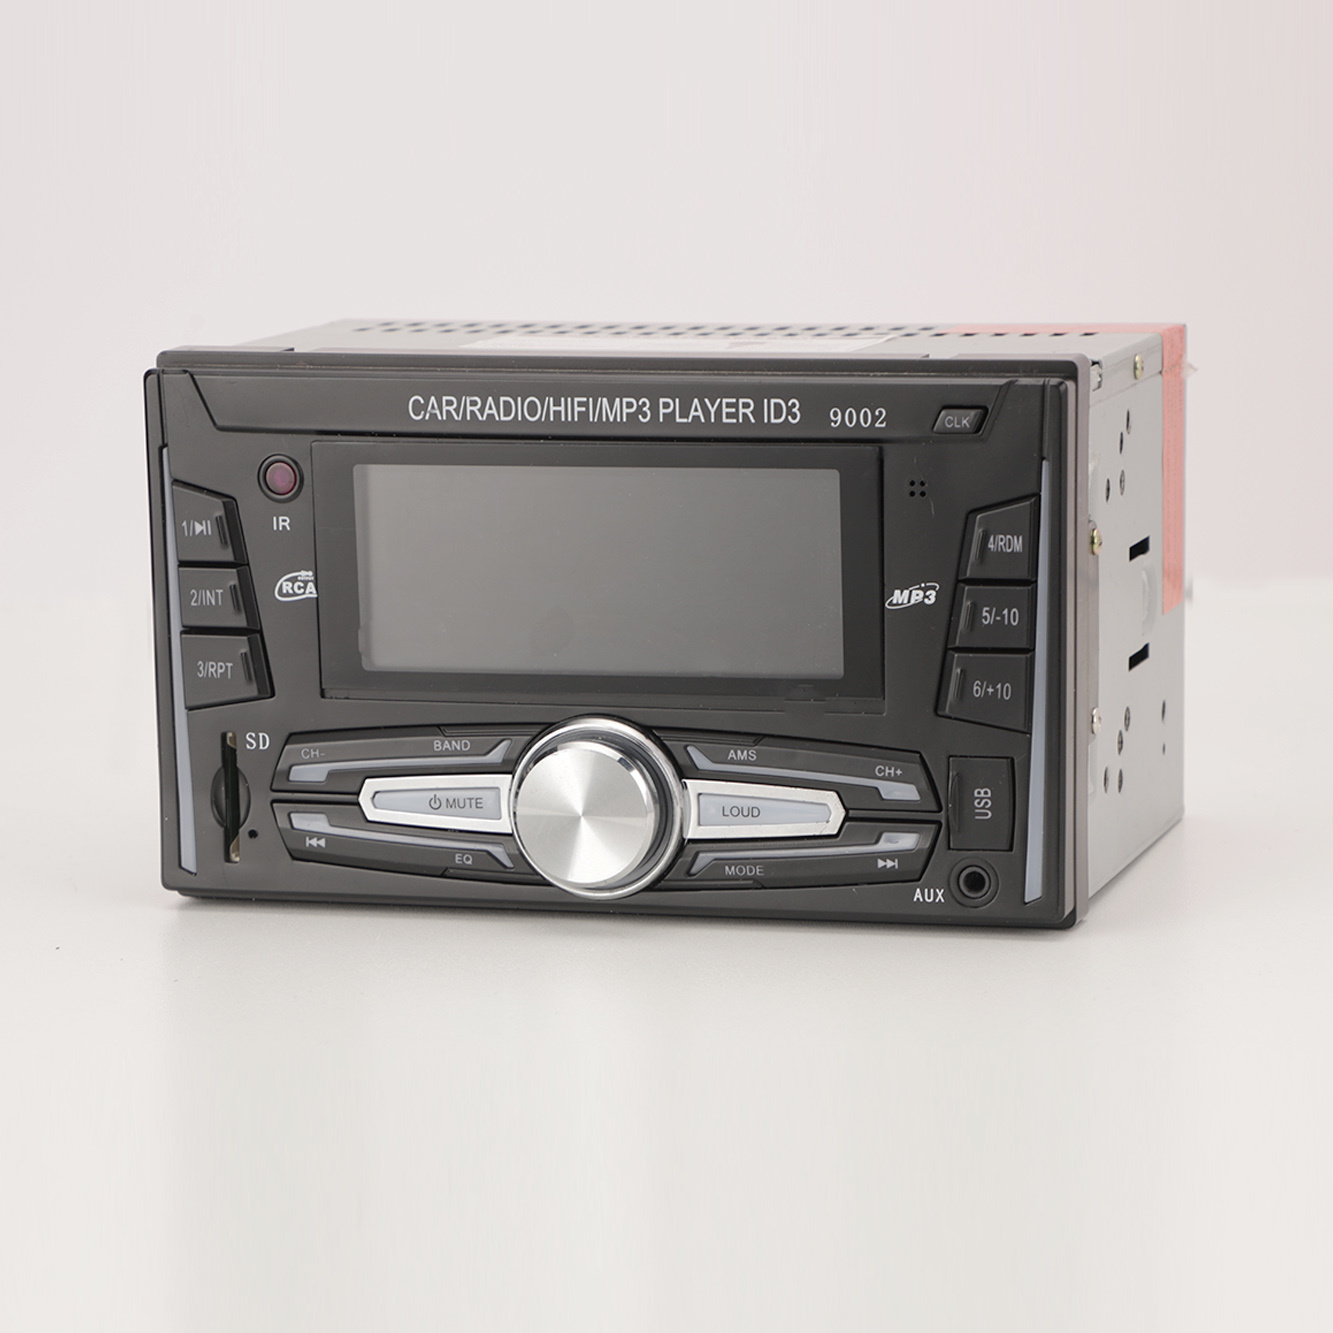 Autoradio mit festem Panel, Doppel-DIN-Auto-MP3-Player